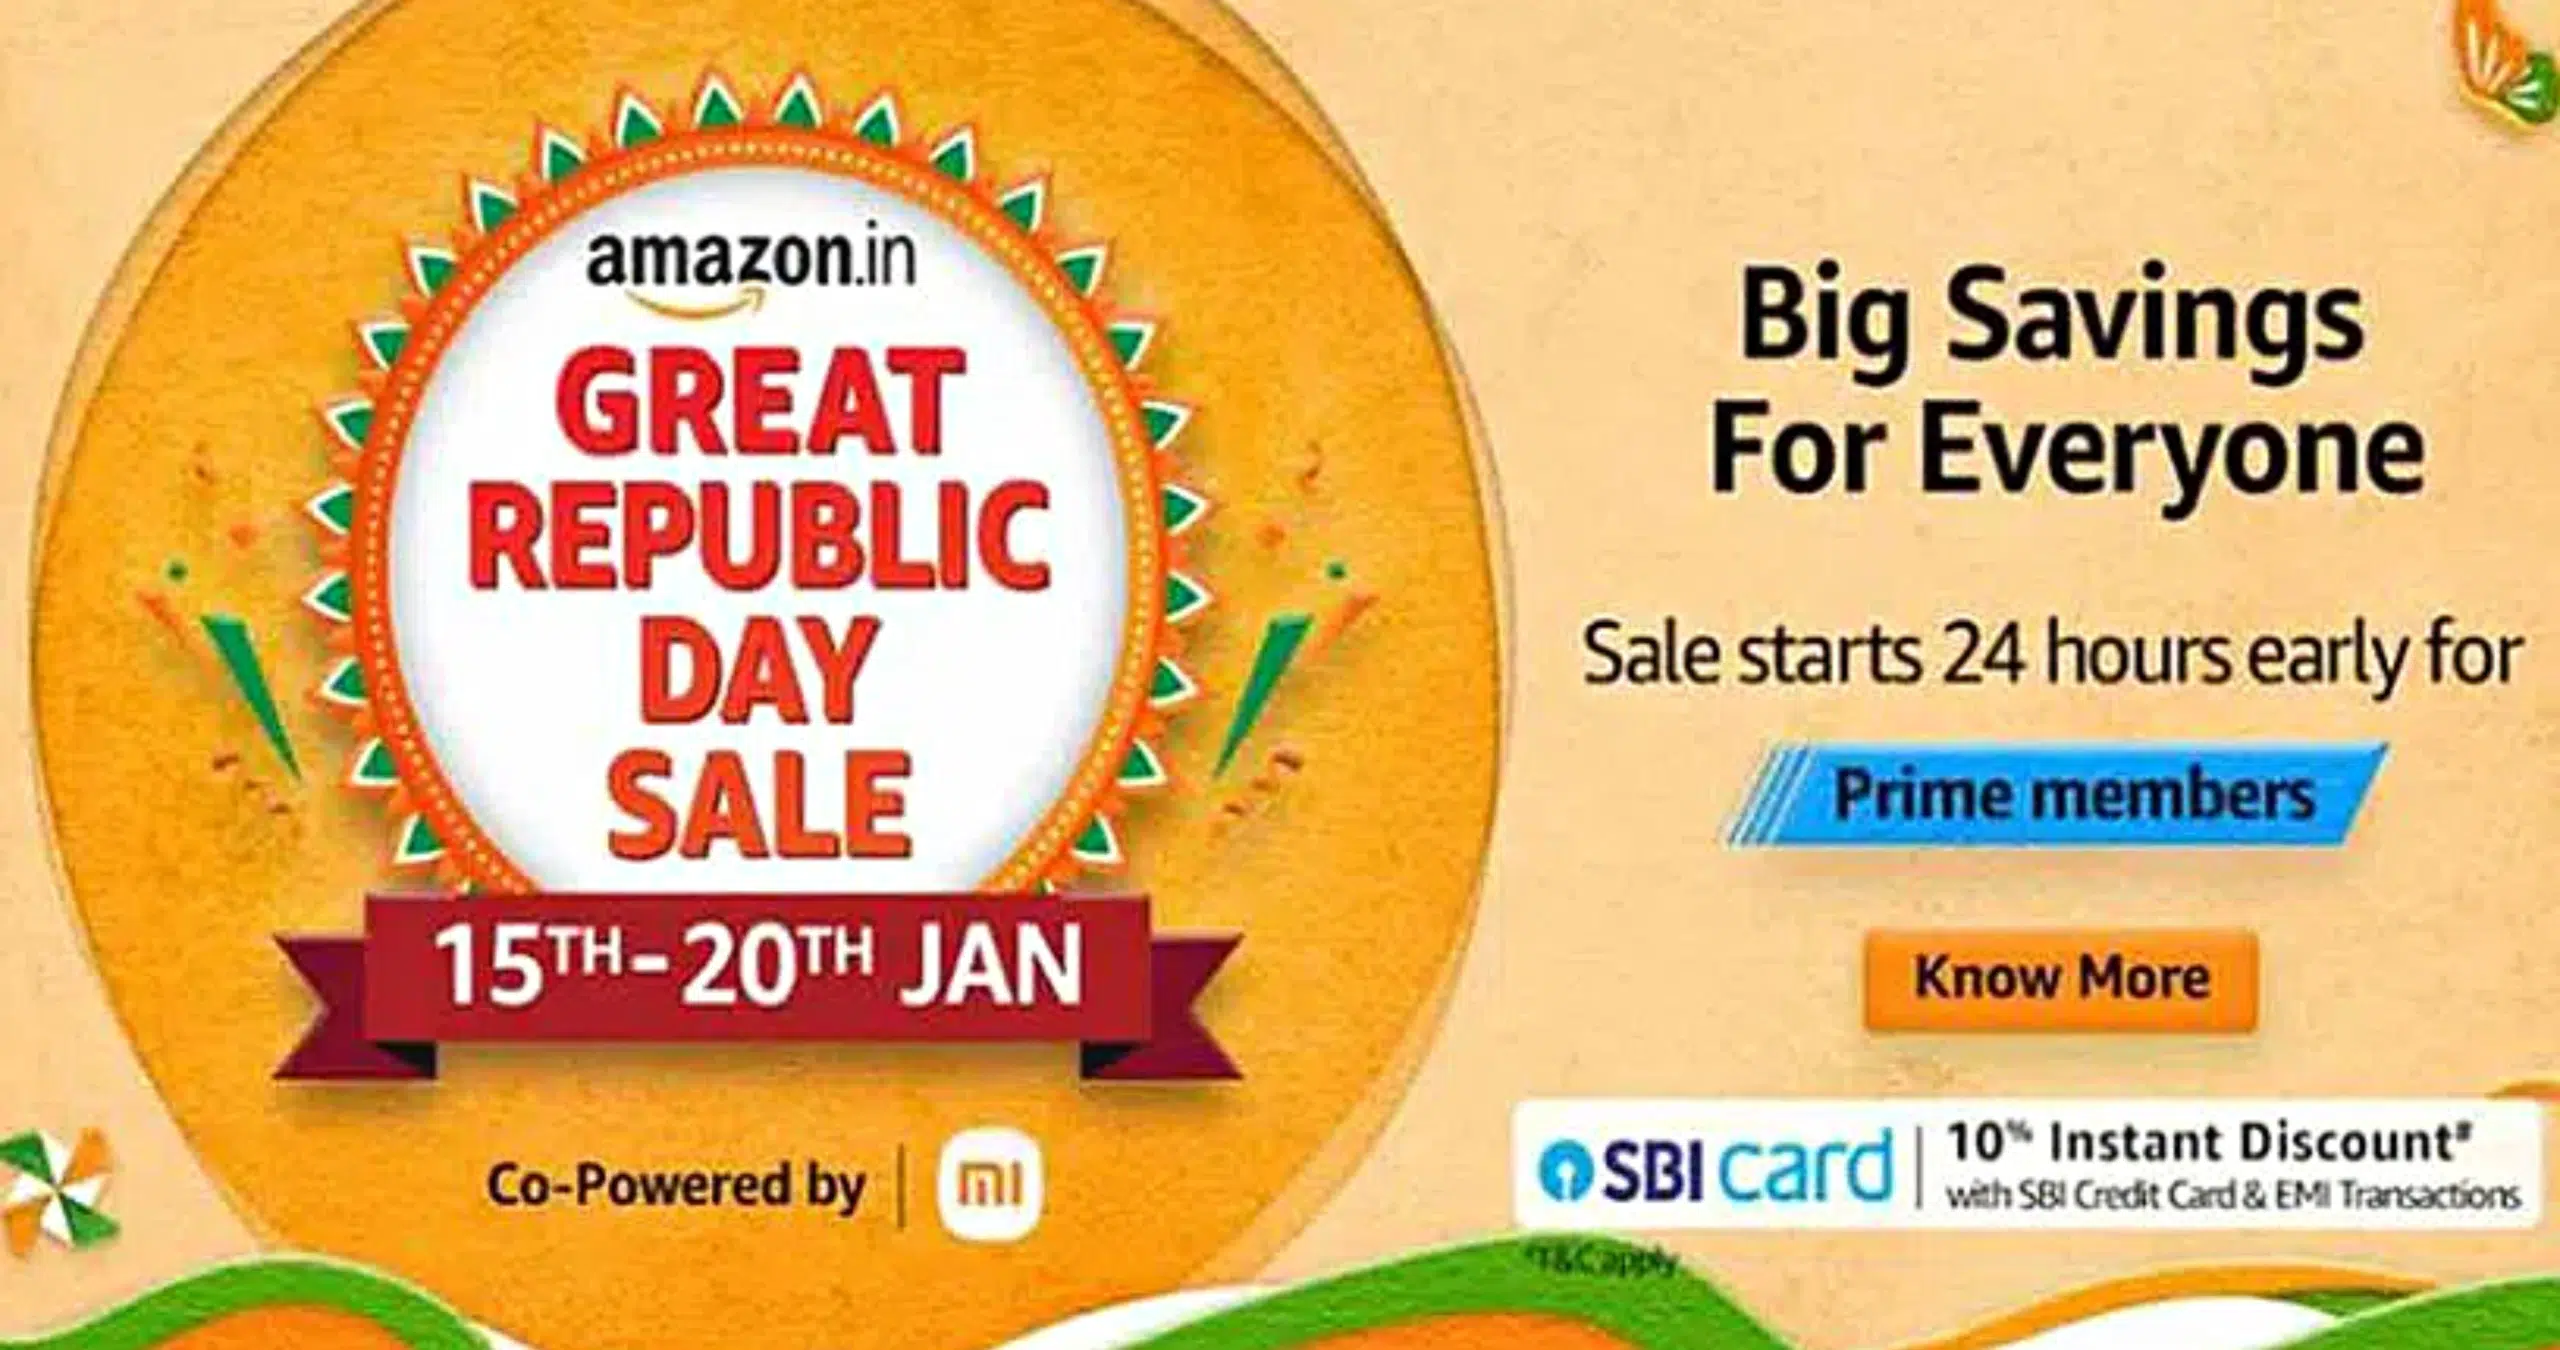 Amazon Great Republic days sale